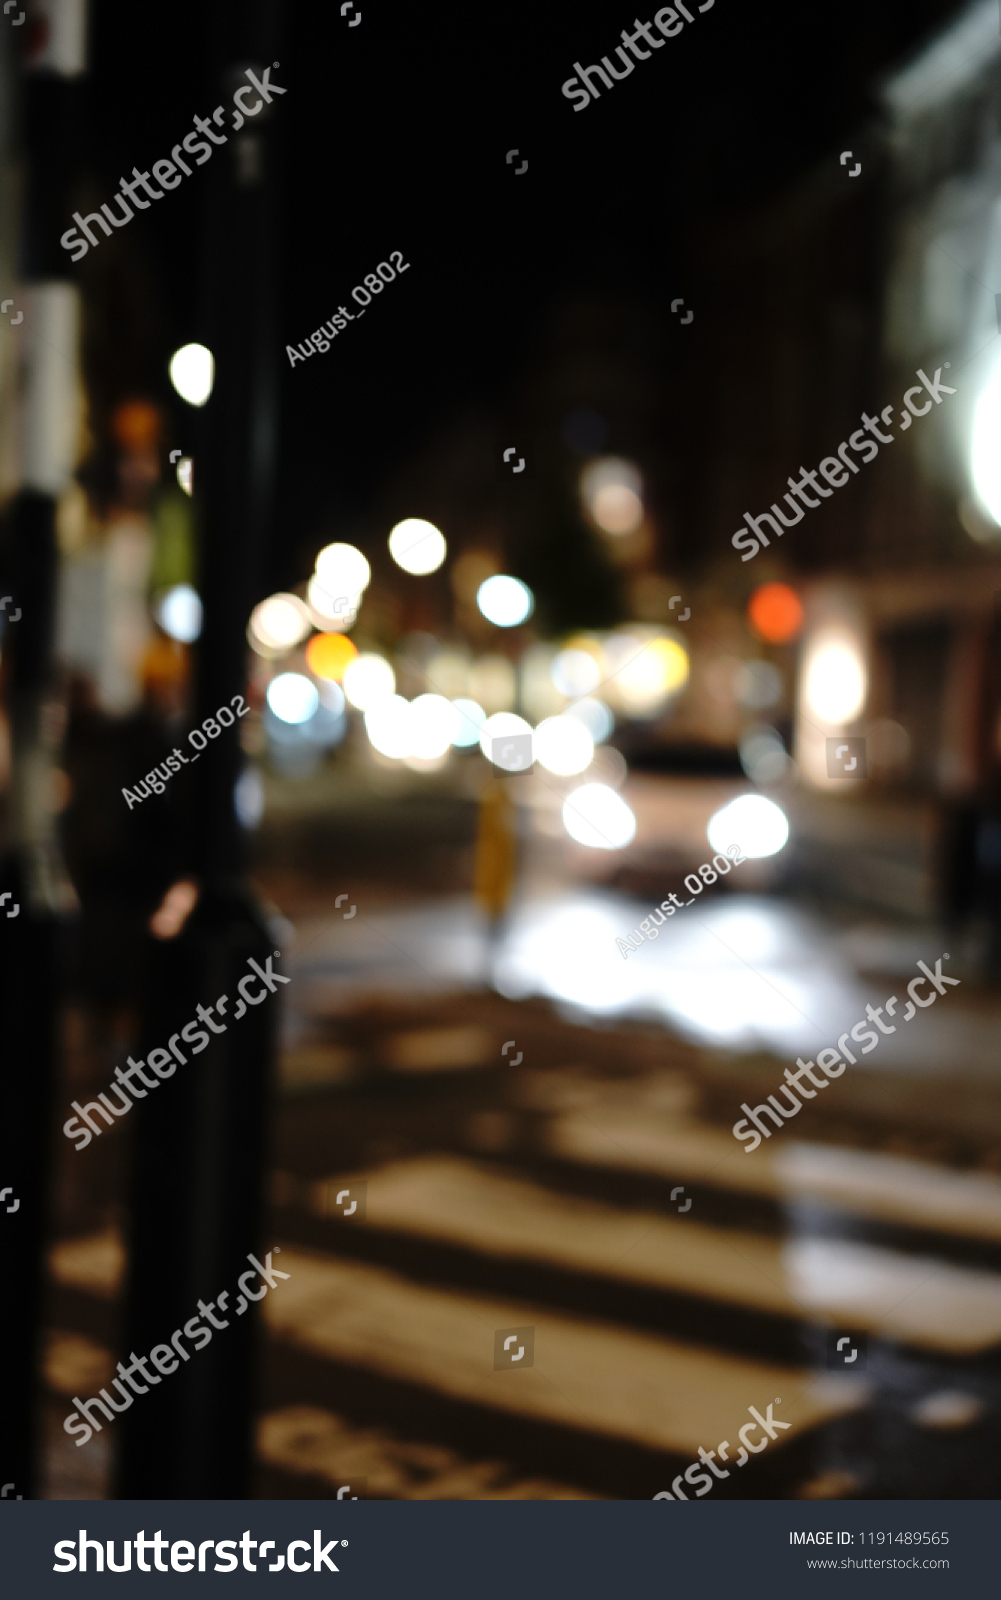 Blur focused urban abstract texture bokeh city lights & traffic jams in London #1191489565